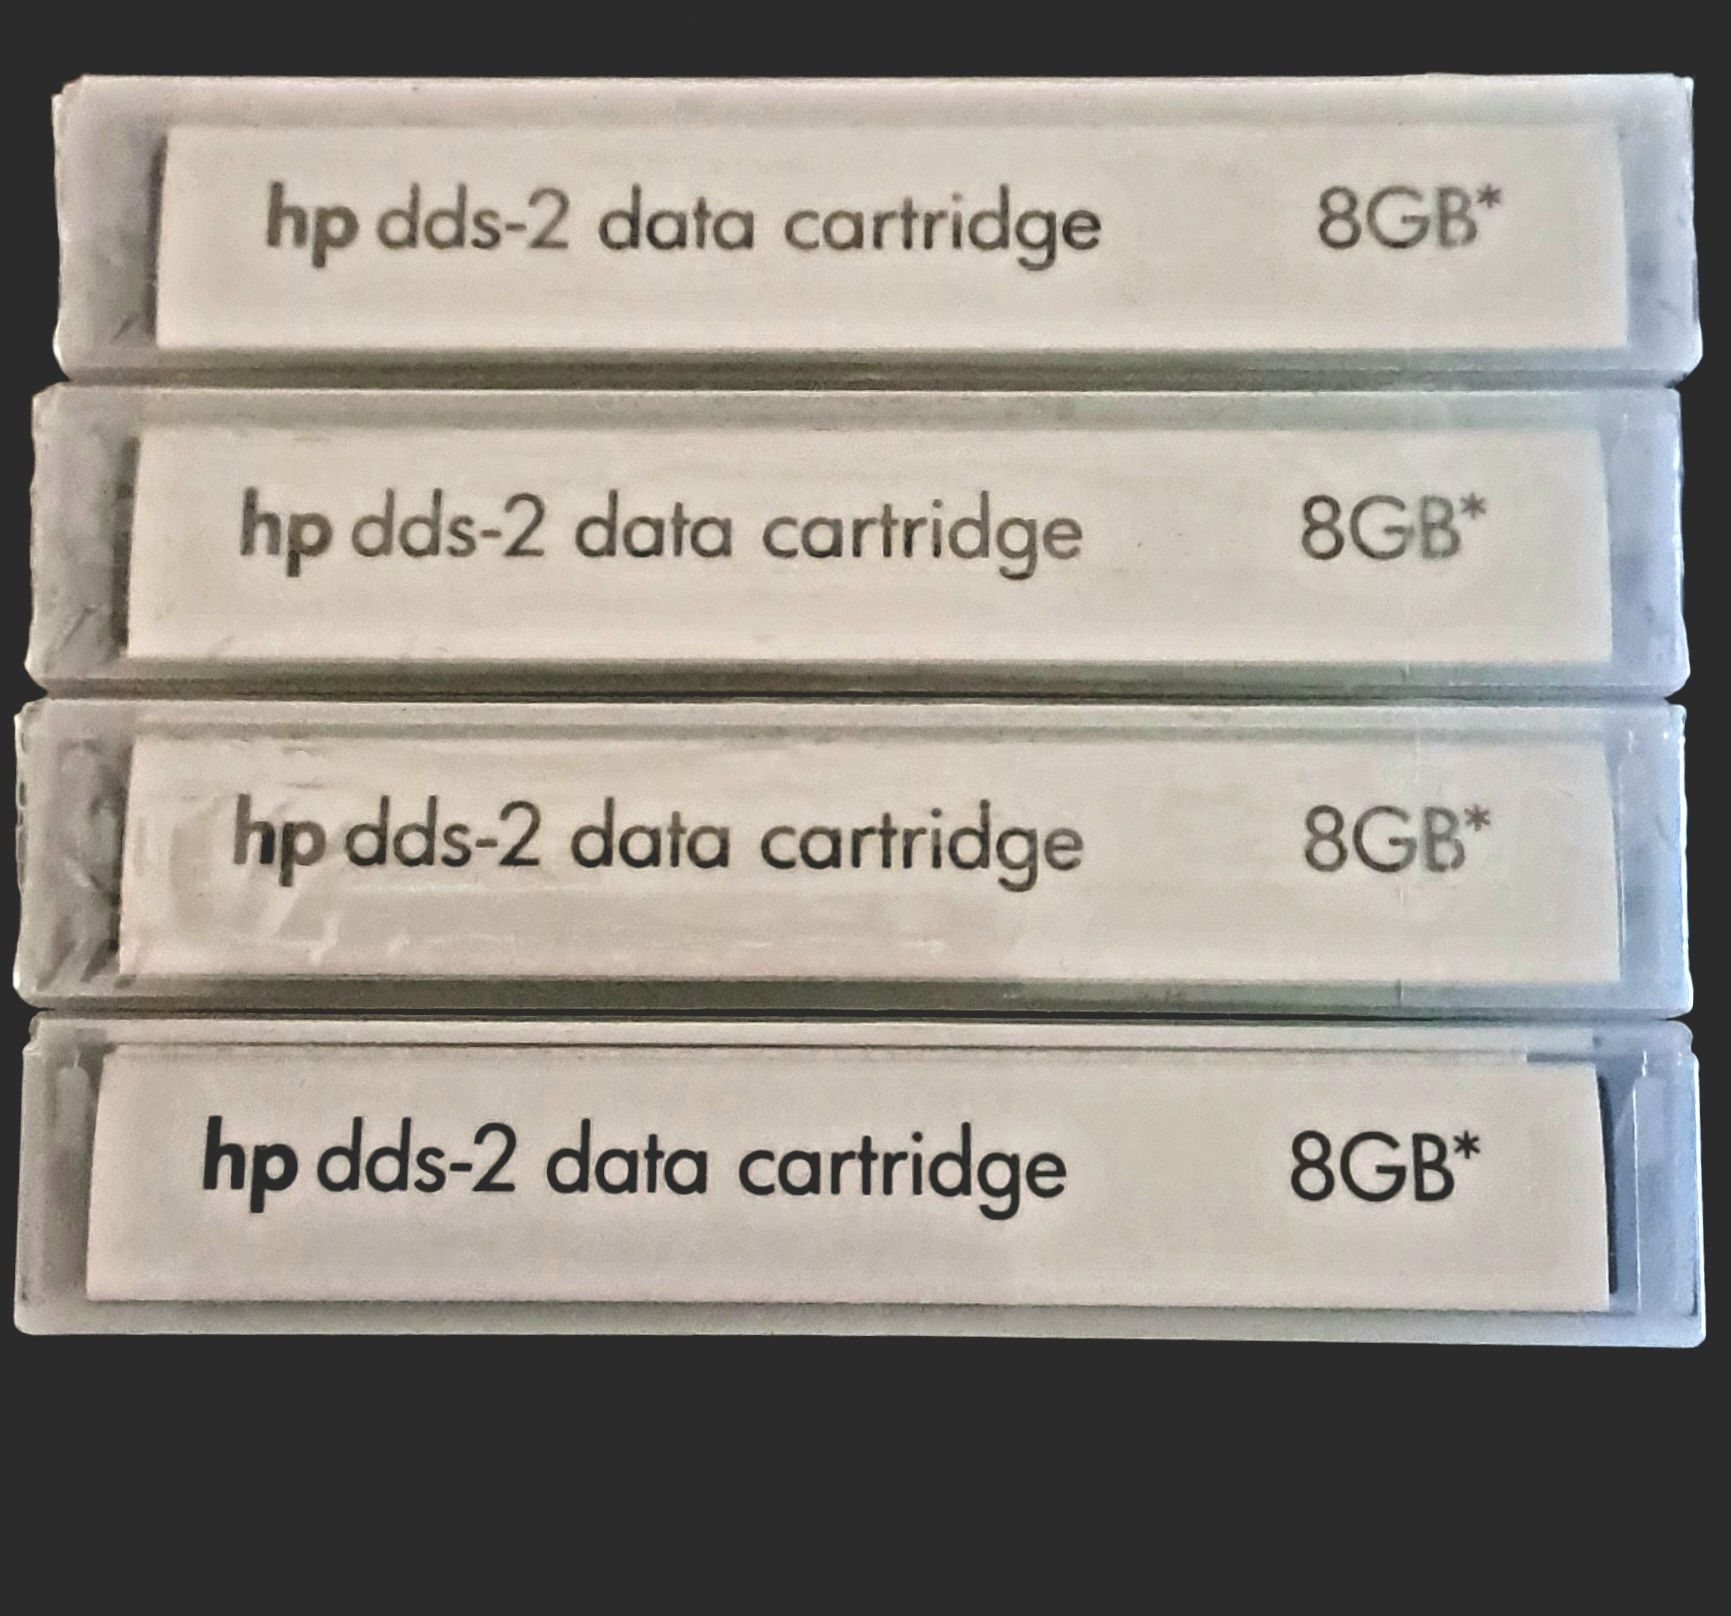 HP dds-2 Data Cartridge C5707A